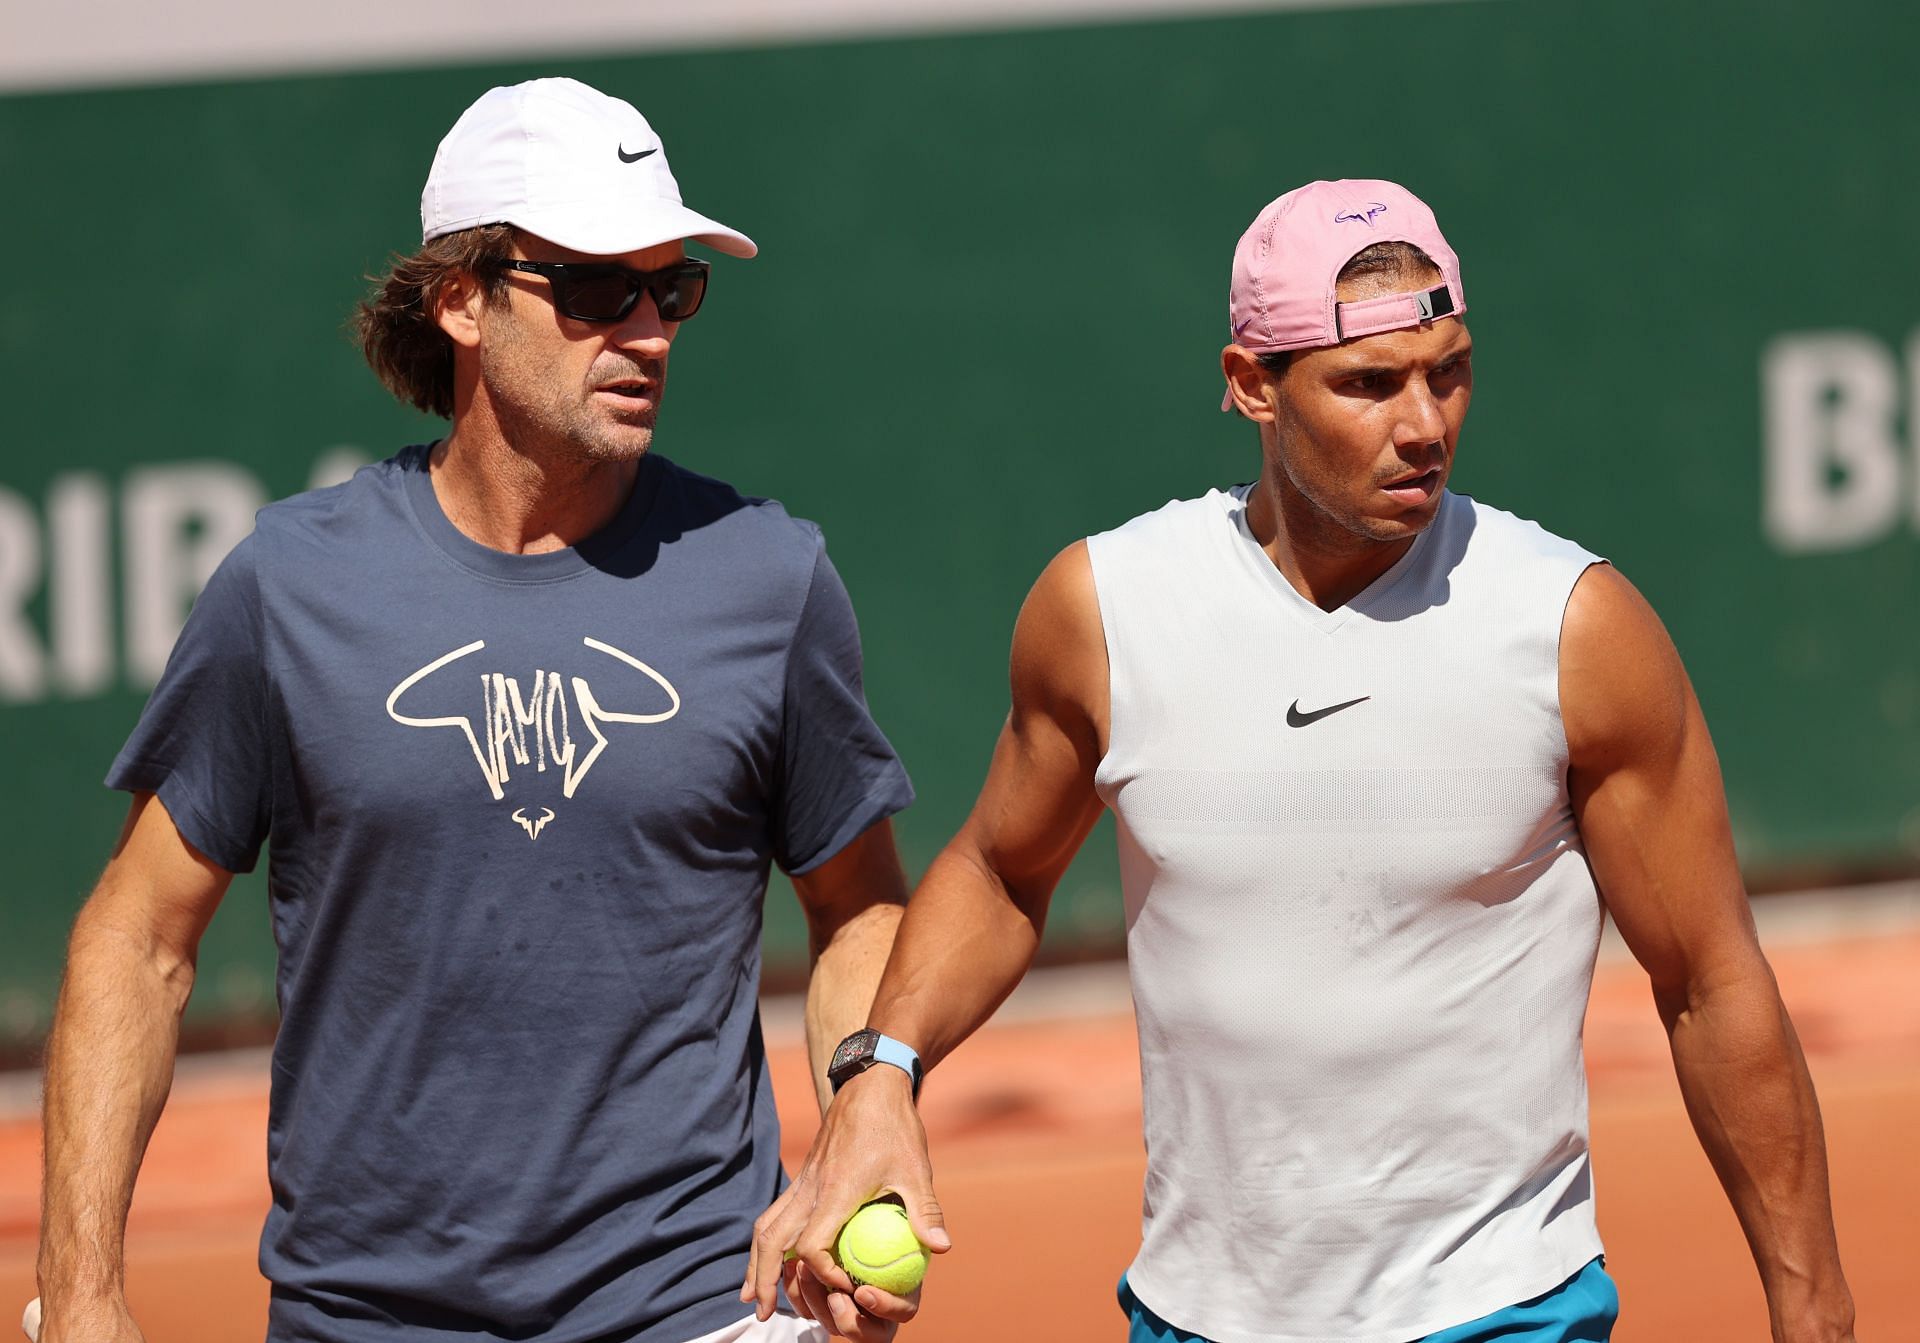 Carlos Moya and Rafael Nadal at the 2021 French Open